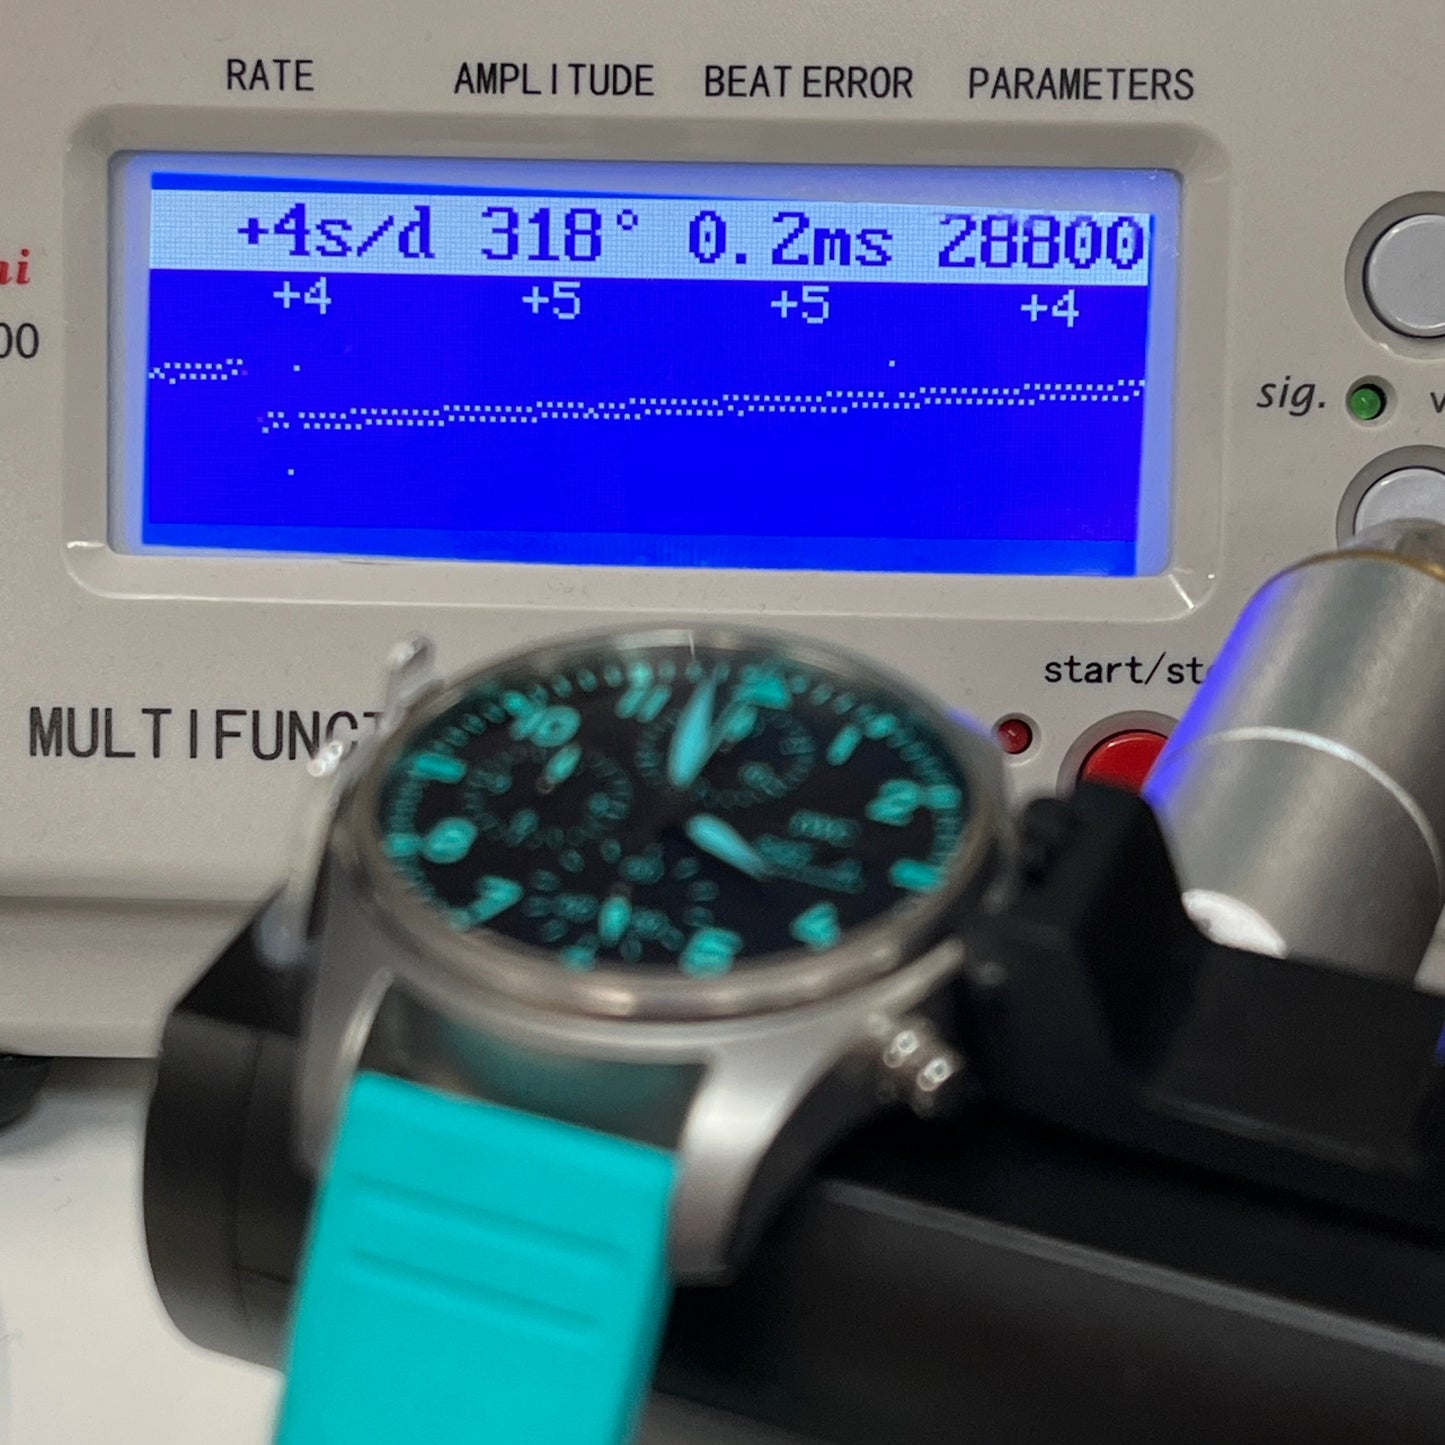 IW388108　Pilot watch chronograph 41 MERCEDES-AMG PETRONAS FORMULA ONE TEAM　2IWC01-00291